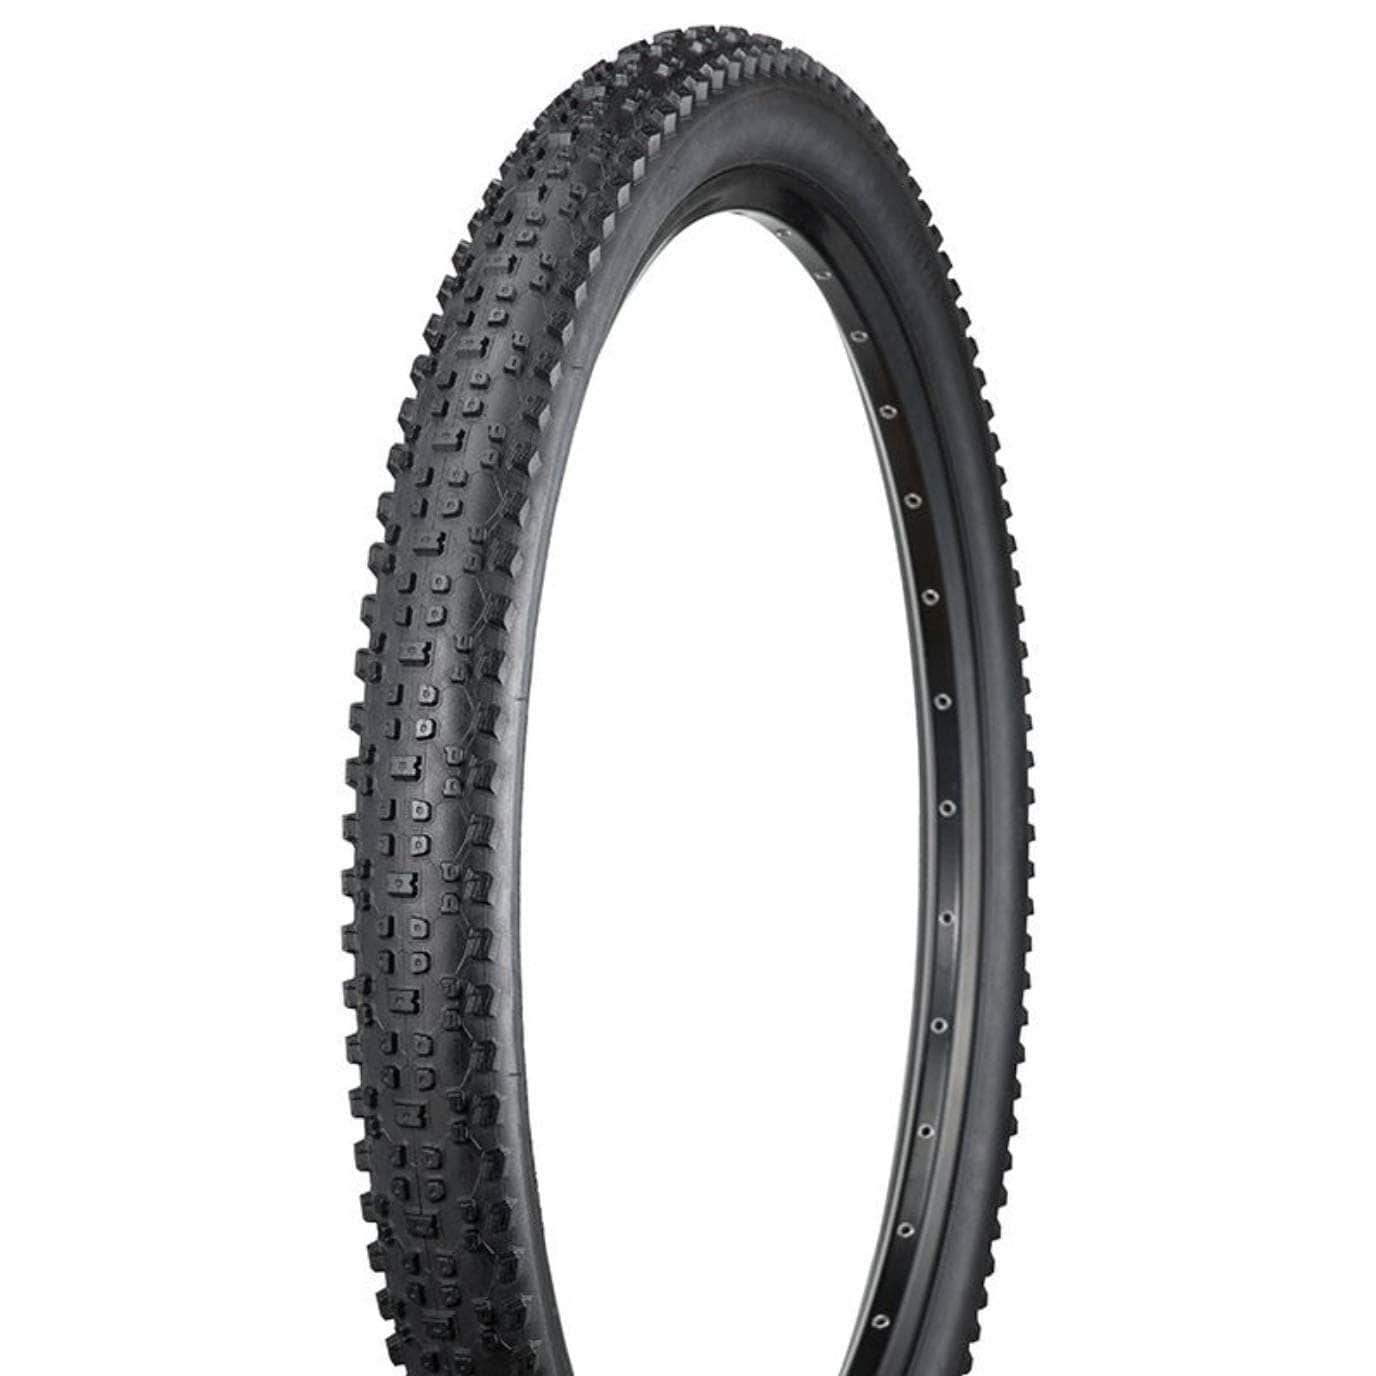 Giant Sycamore XC 27.5" Bike Tire